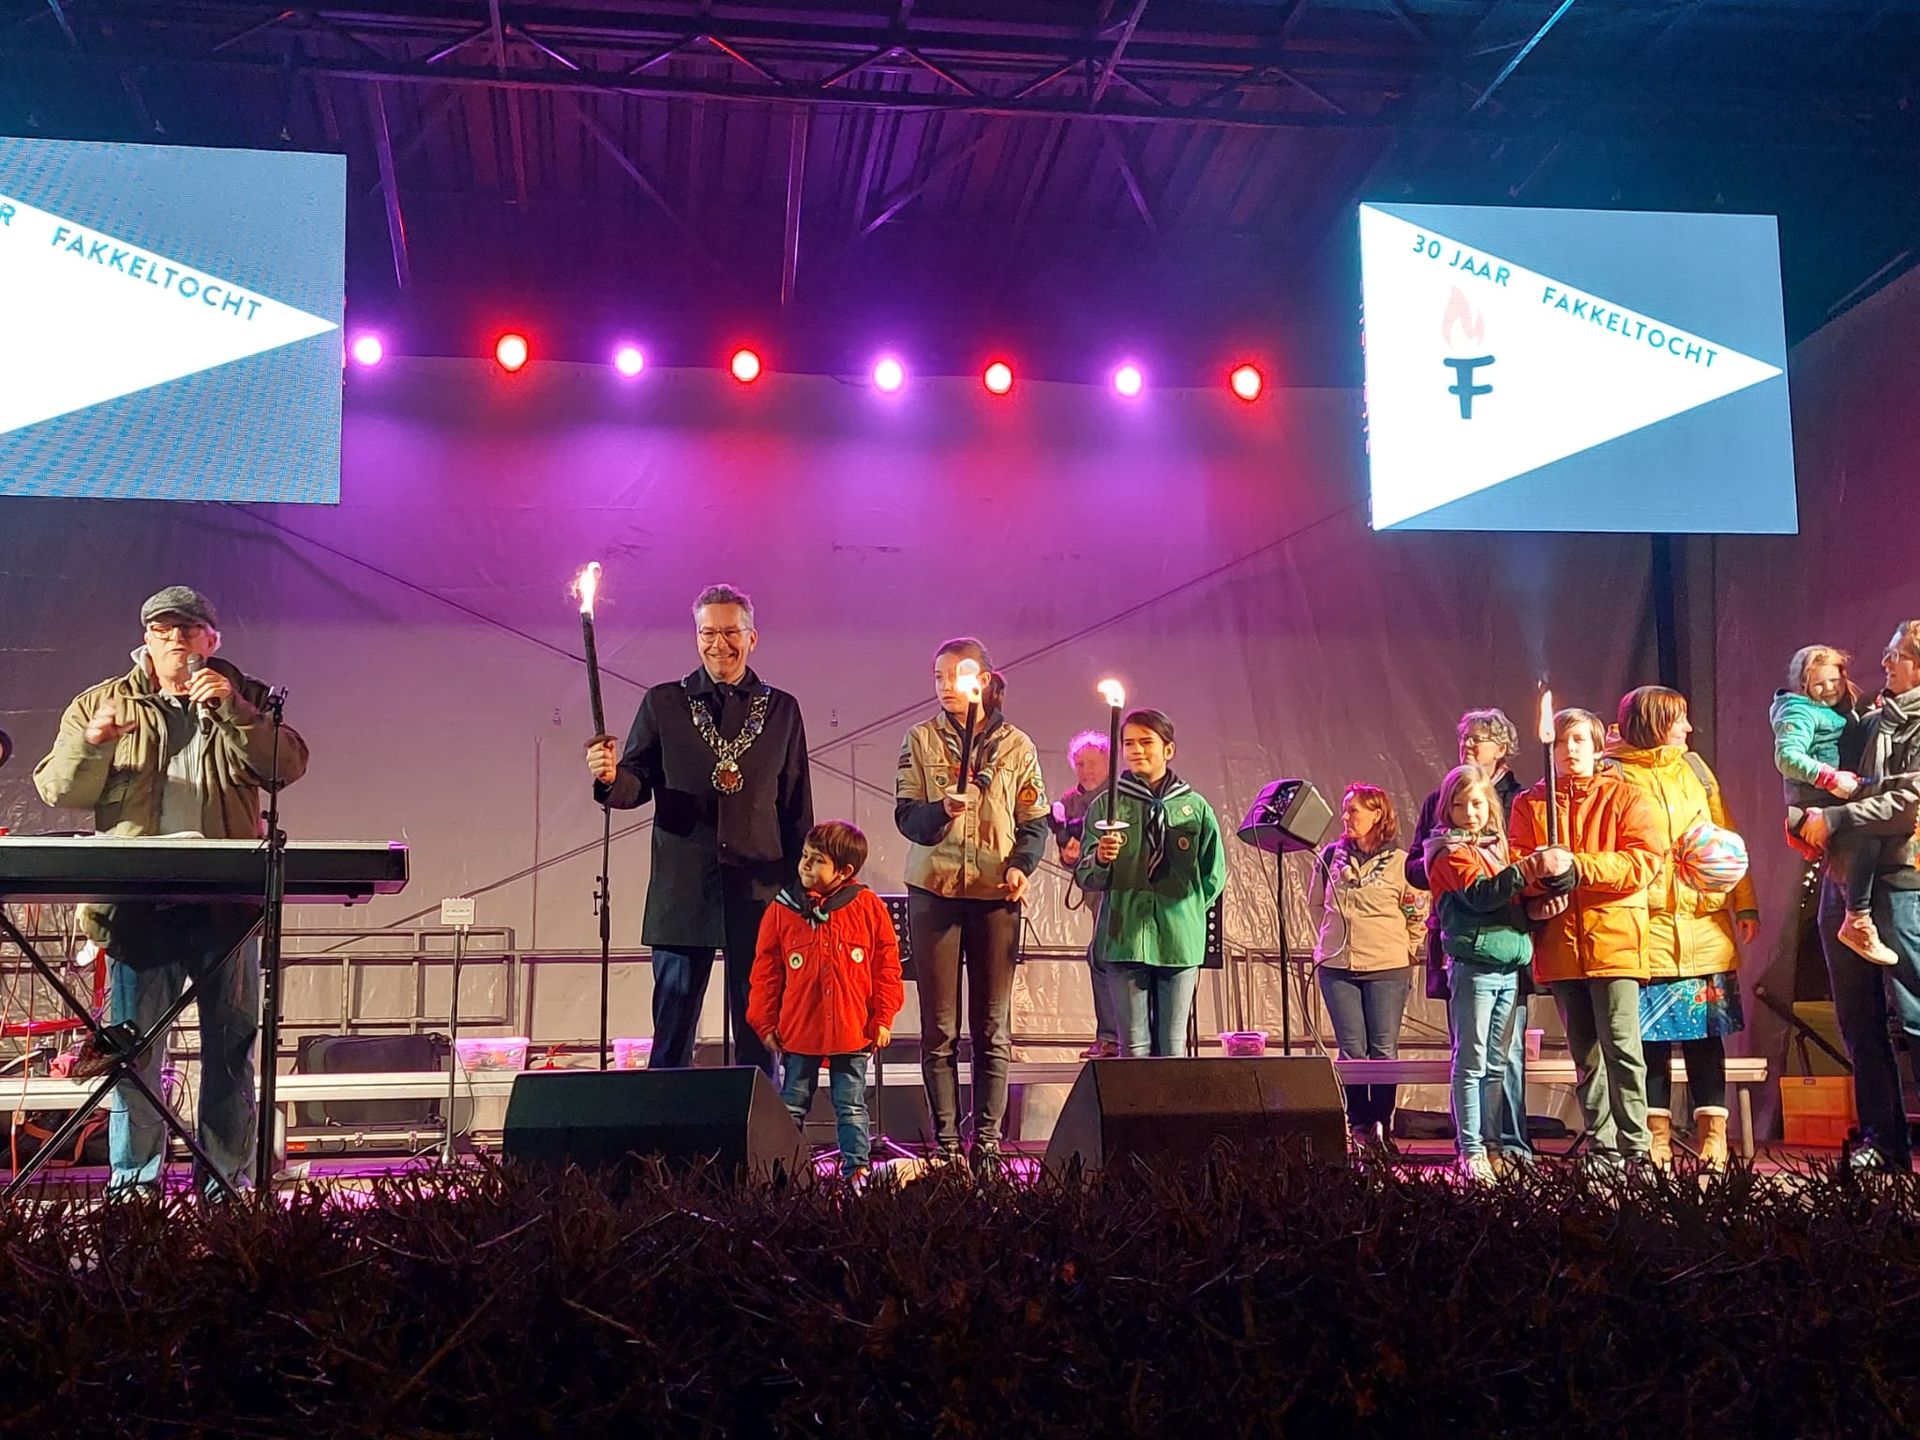 The stage on Wilhelminaplein with Mayor Dijsselbloem and the Johannes Vianney Scouts